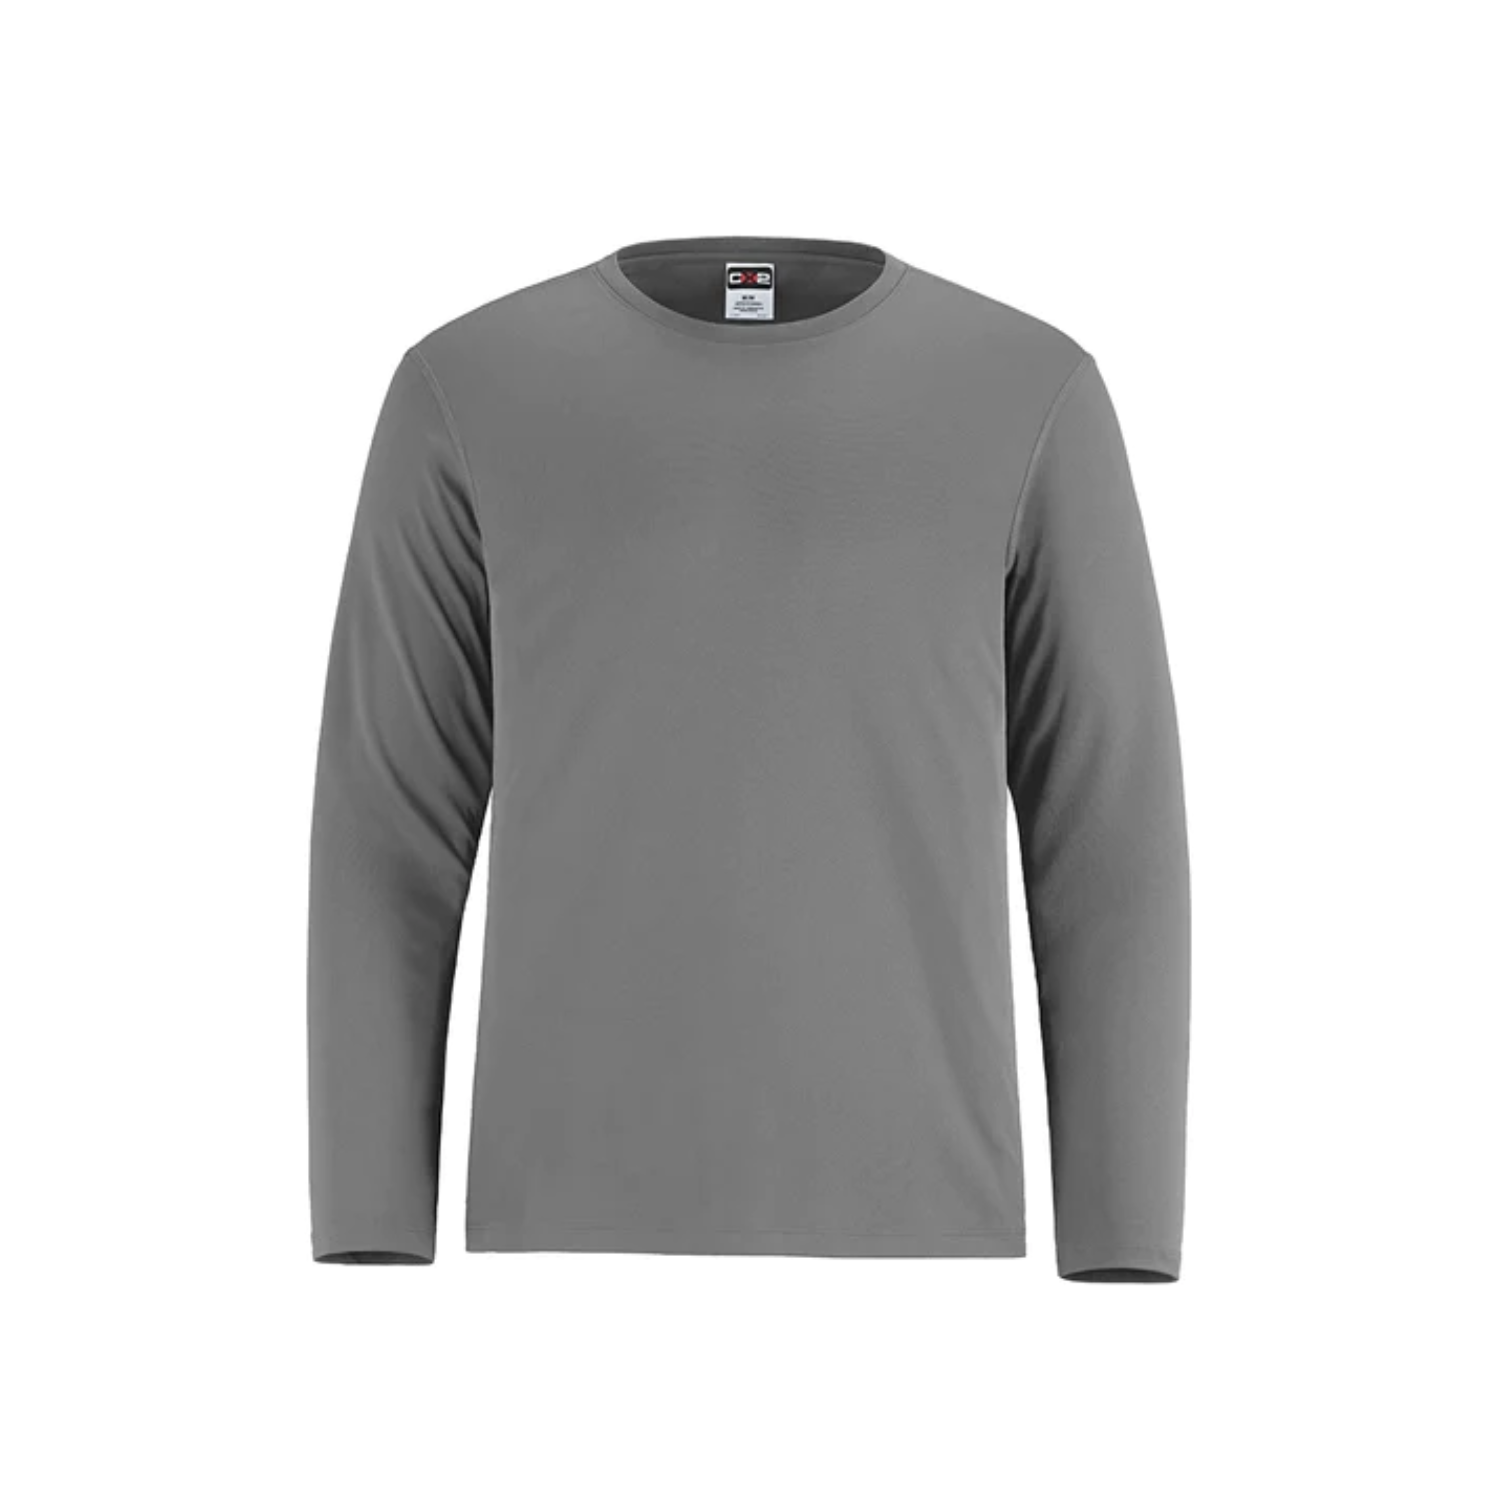 S05937 - Shore - Men's Long Sleeve Crew Neck Polyester T-Shirt